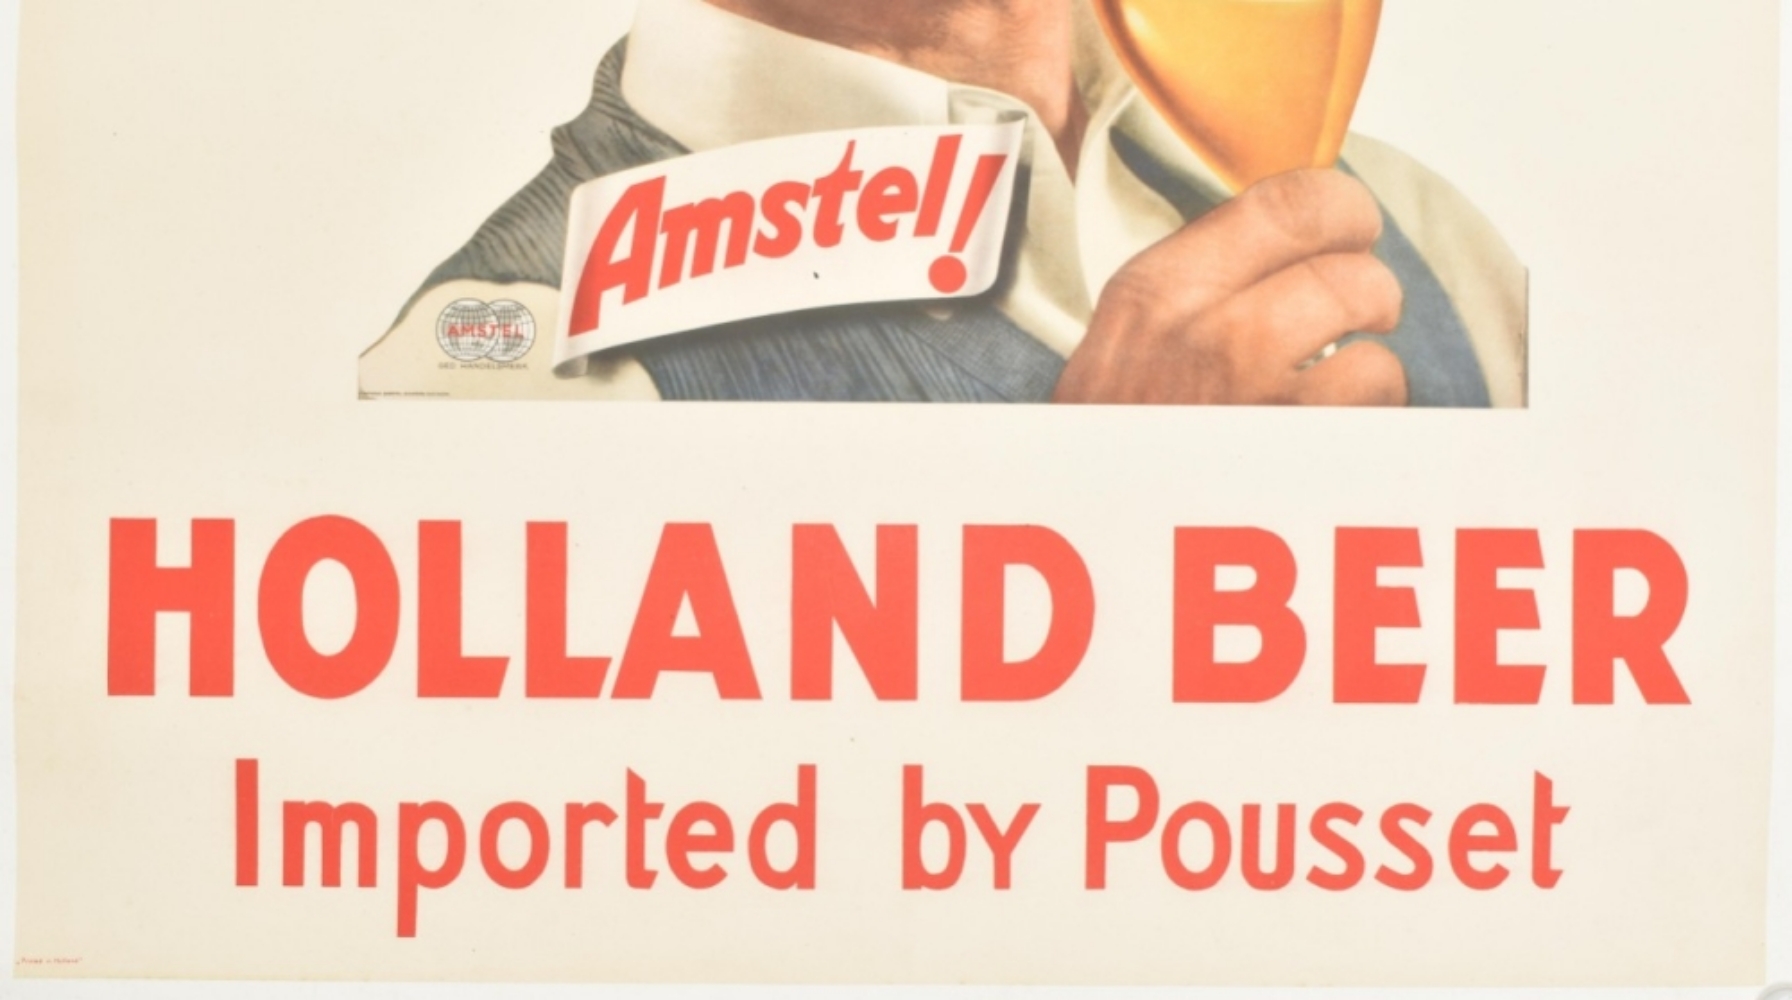 Amstel Holland Beer - Image 3 of 3